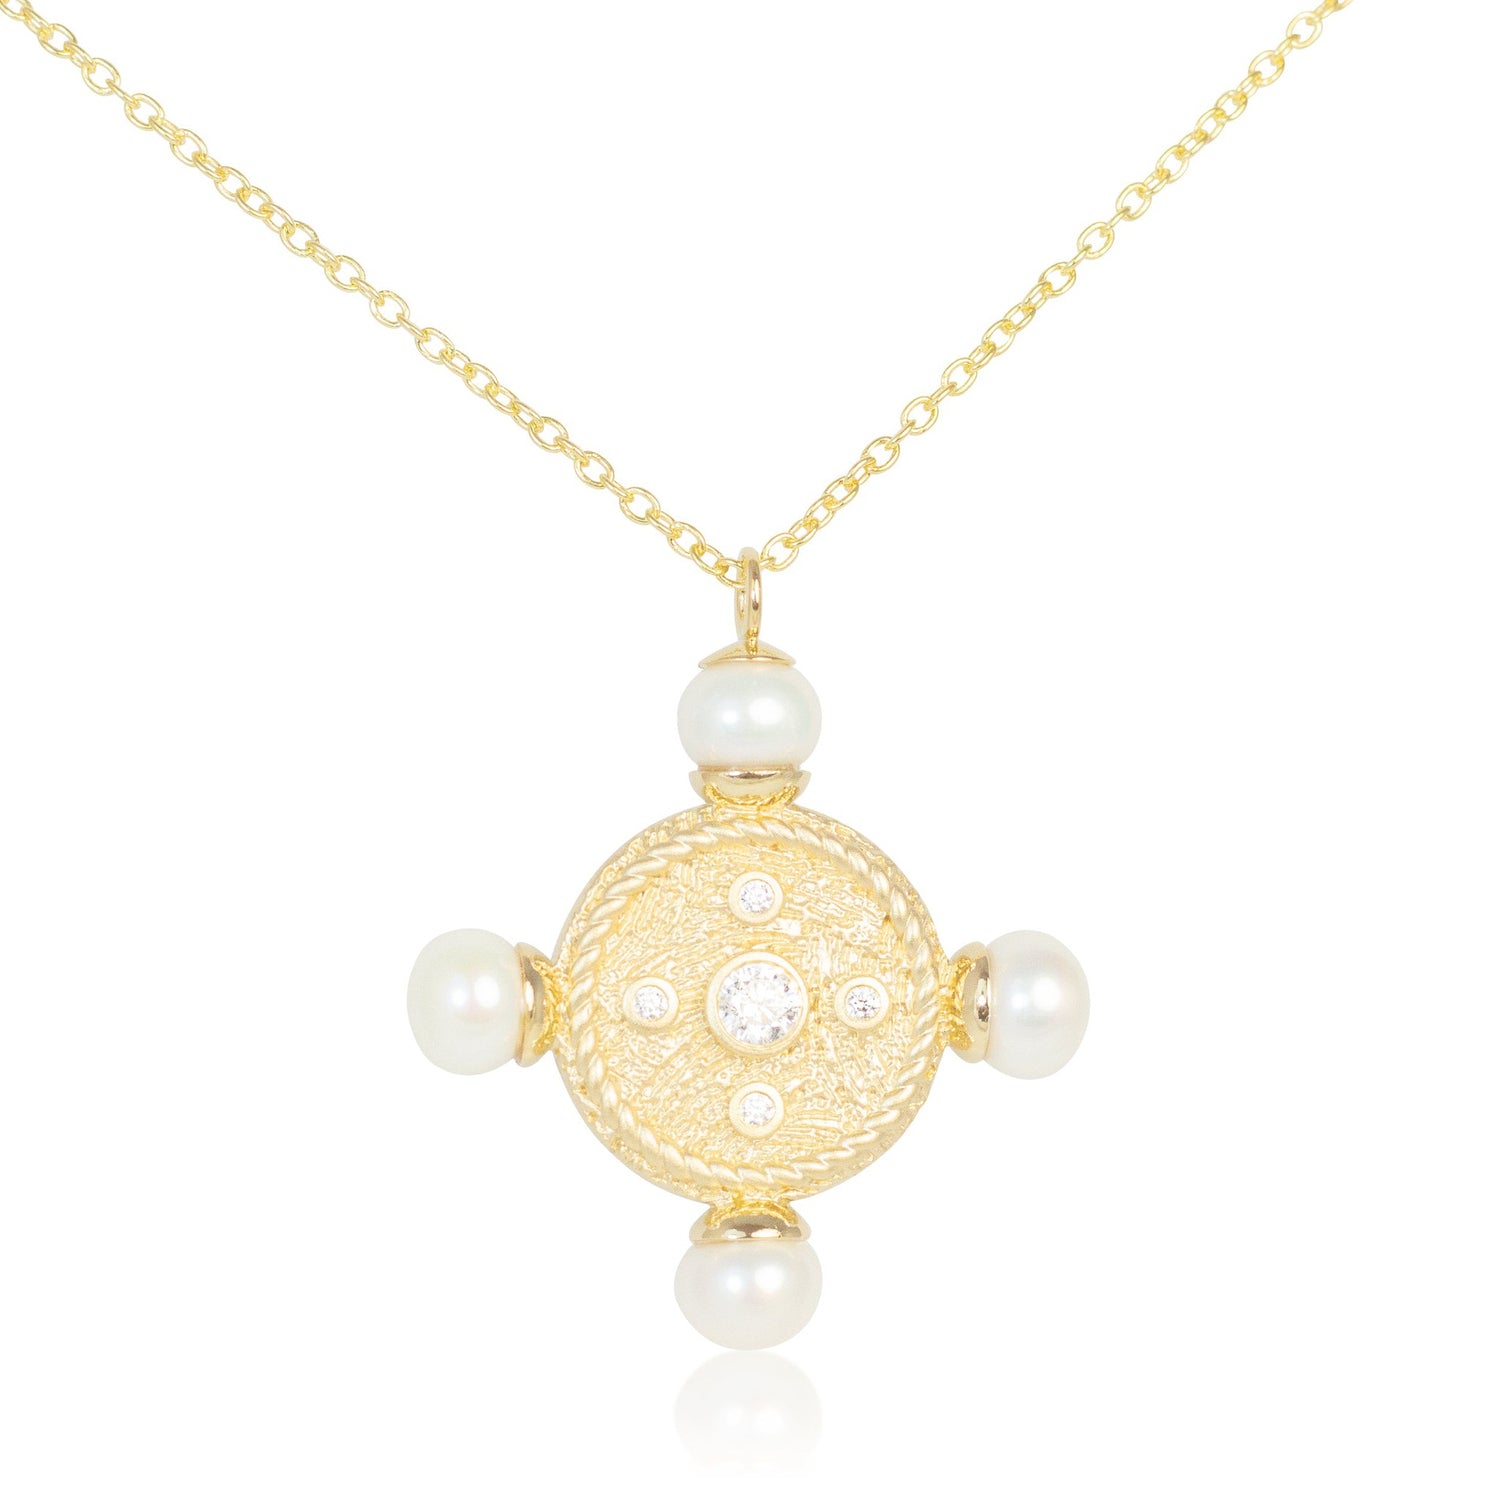 The New Romantics Gold Pearl Pendant